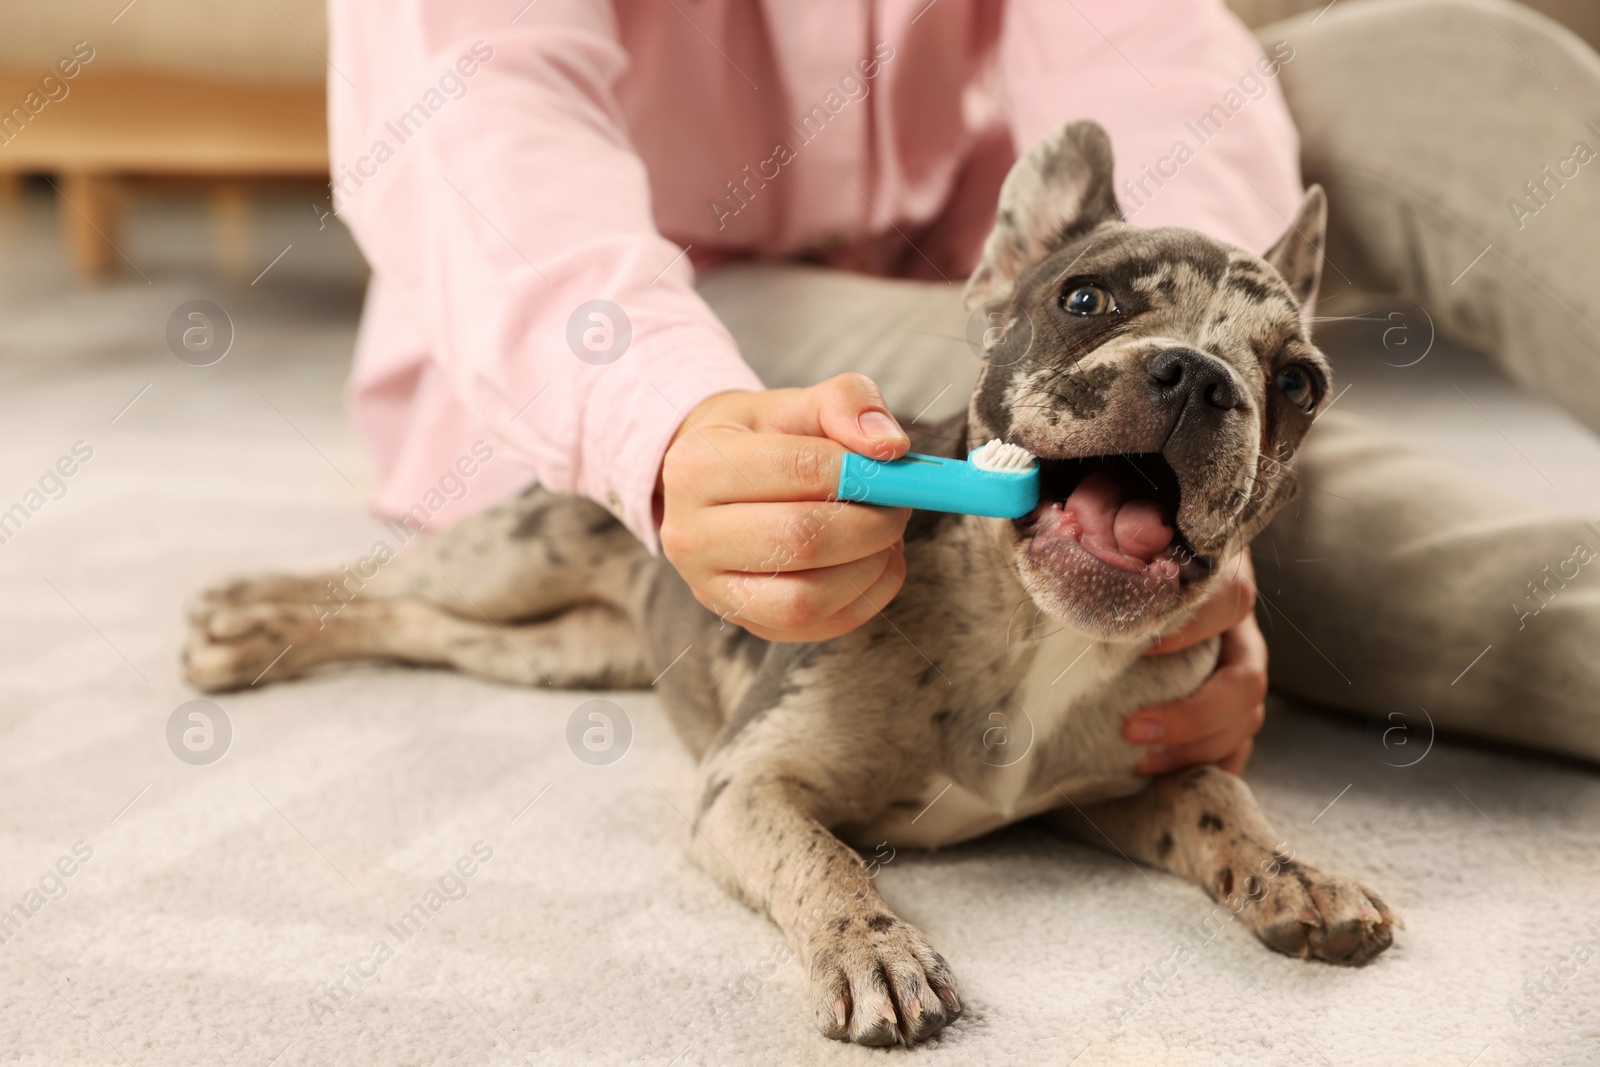 Photo of Woman brushing dog's teeth on floor at home, closeup